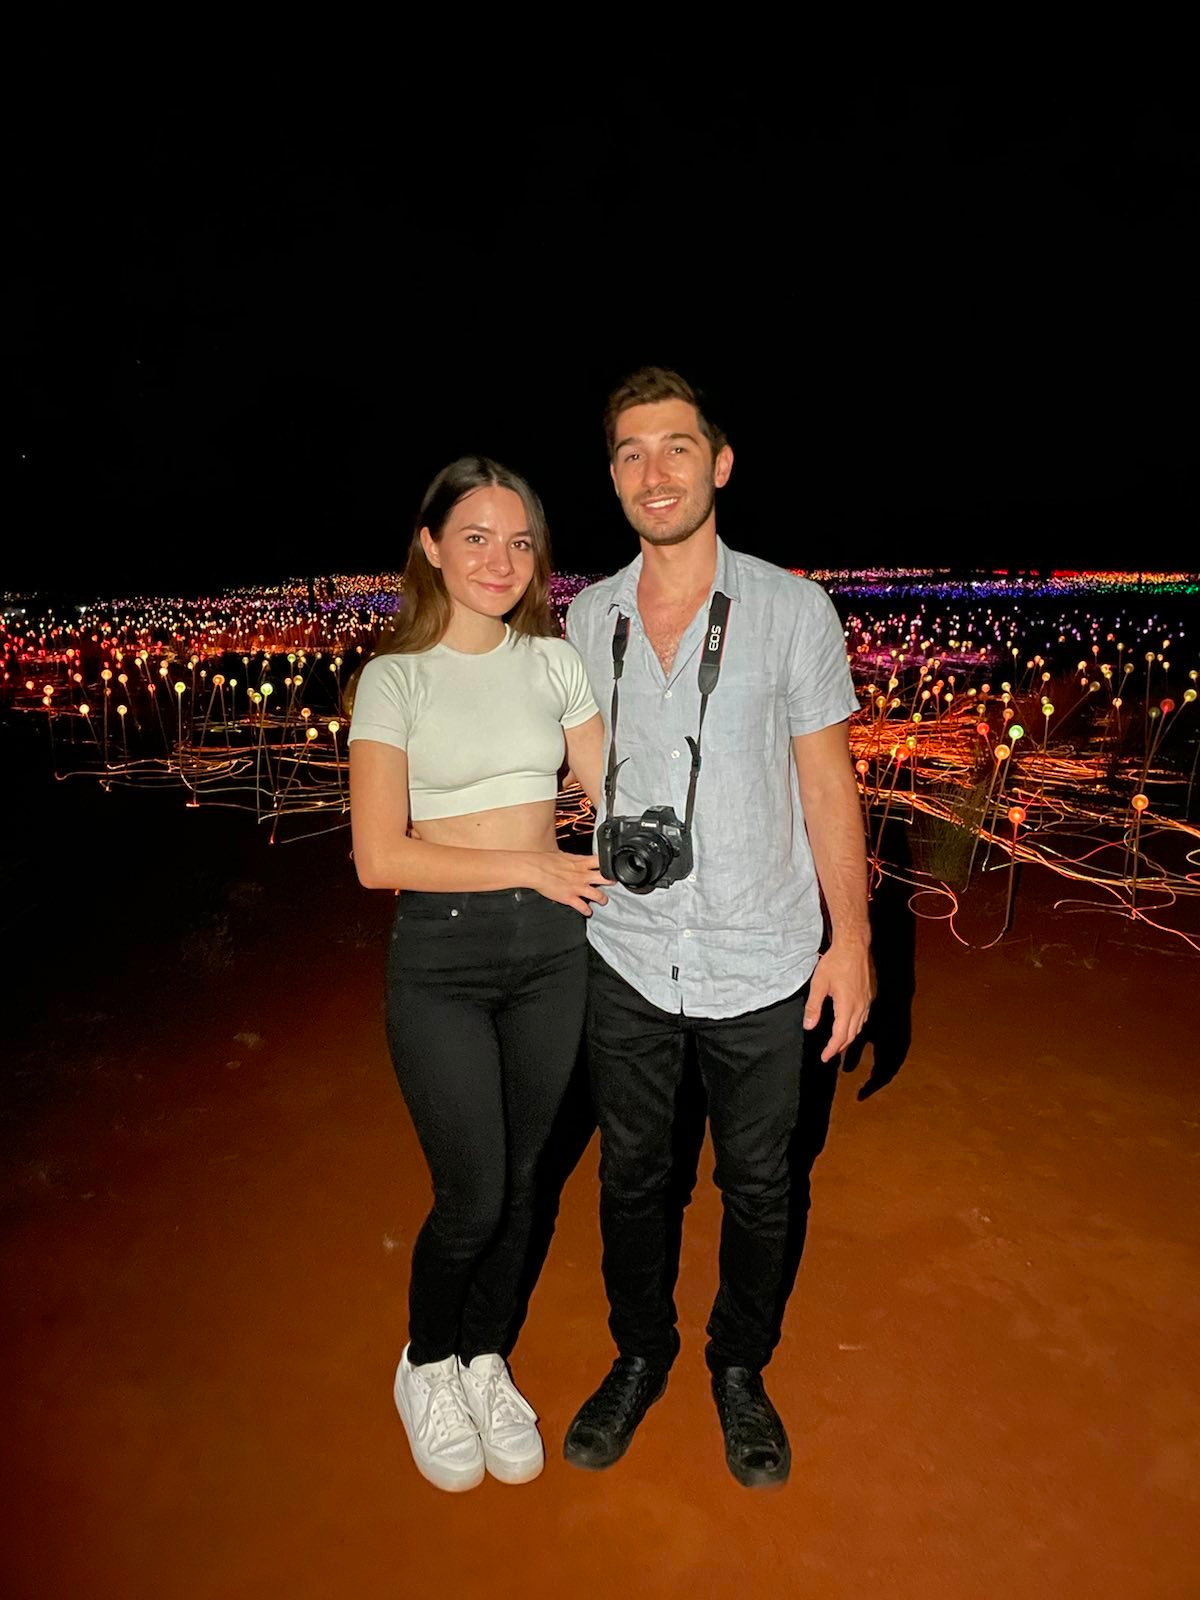 Christian Iacullo with his girlfriend Bojana at the 'Field of Lights' display in Yulara